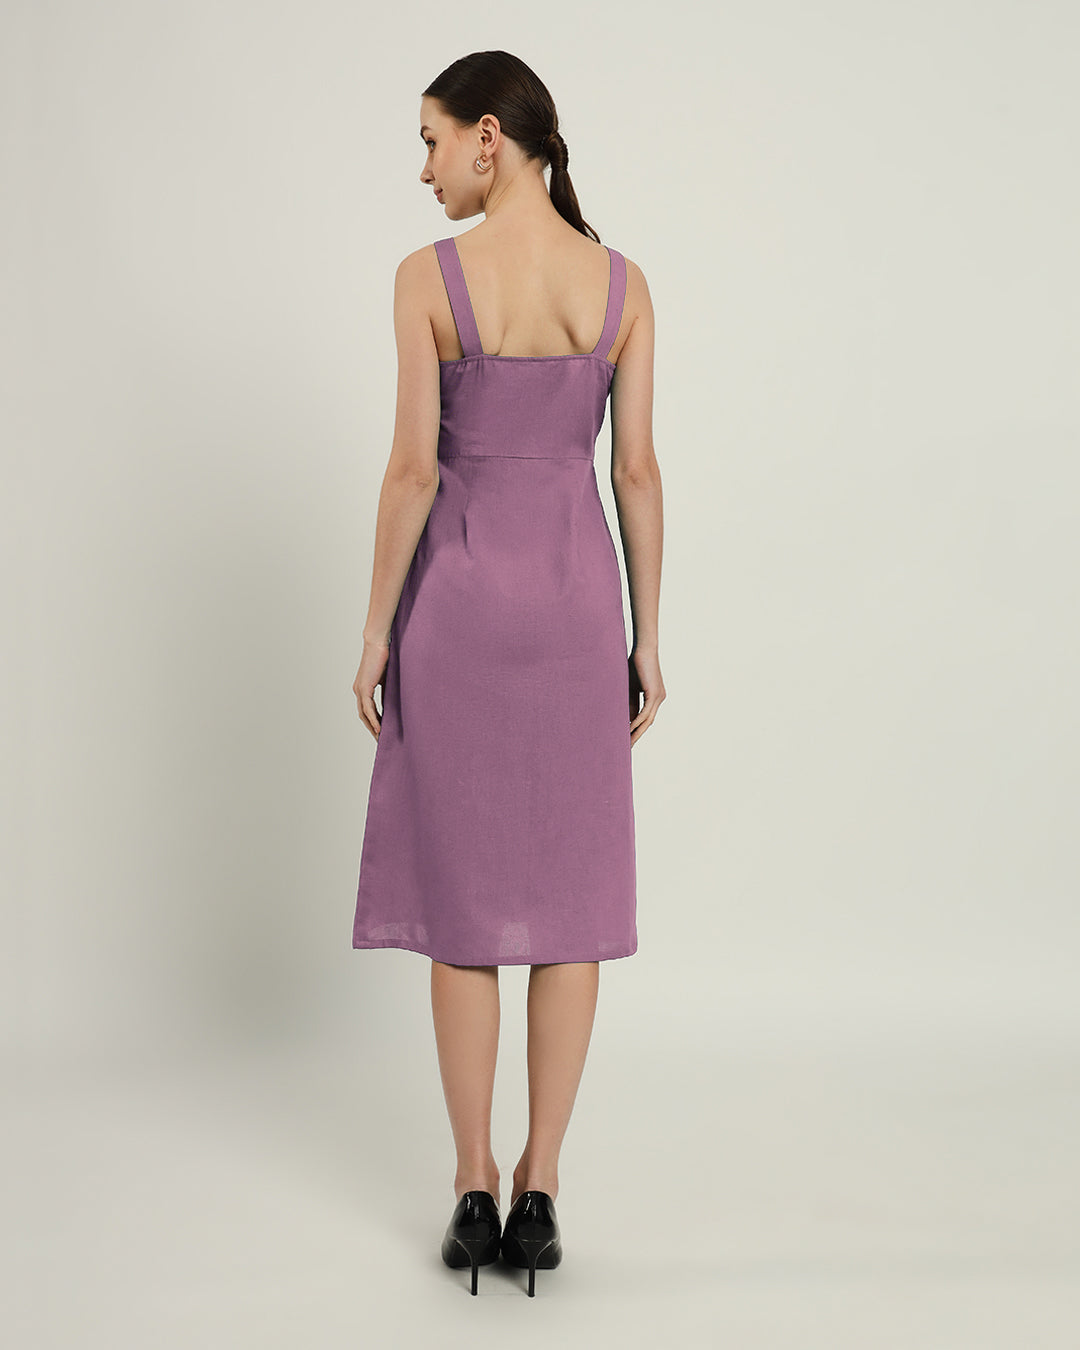 The Samara Purple Swirl Cotton Dress